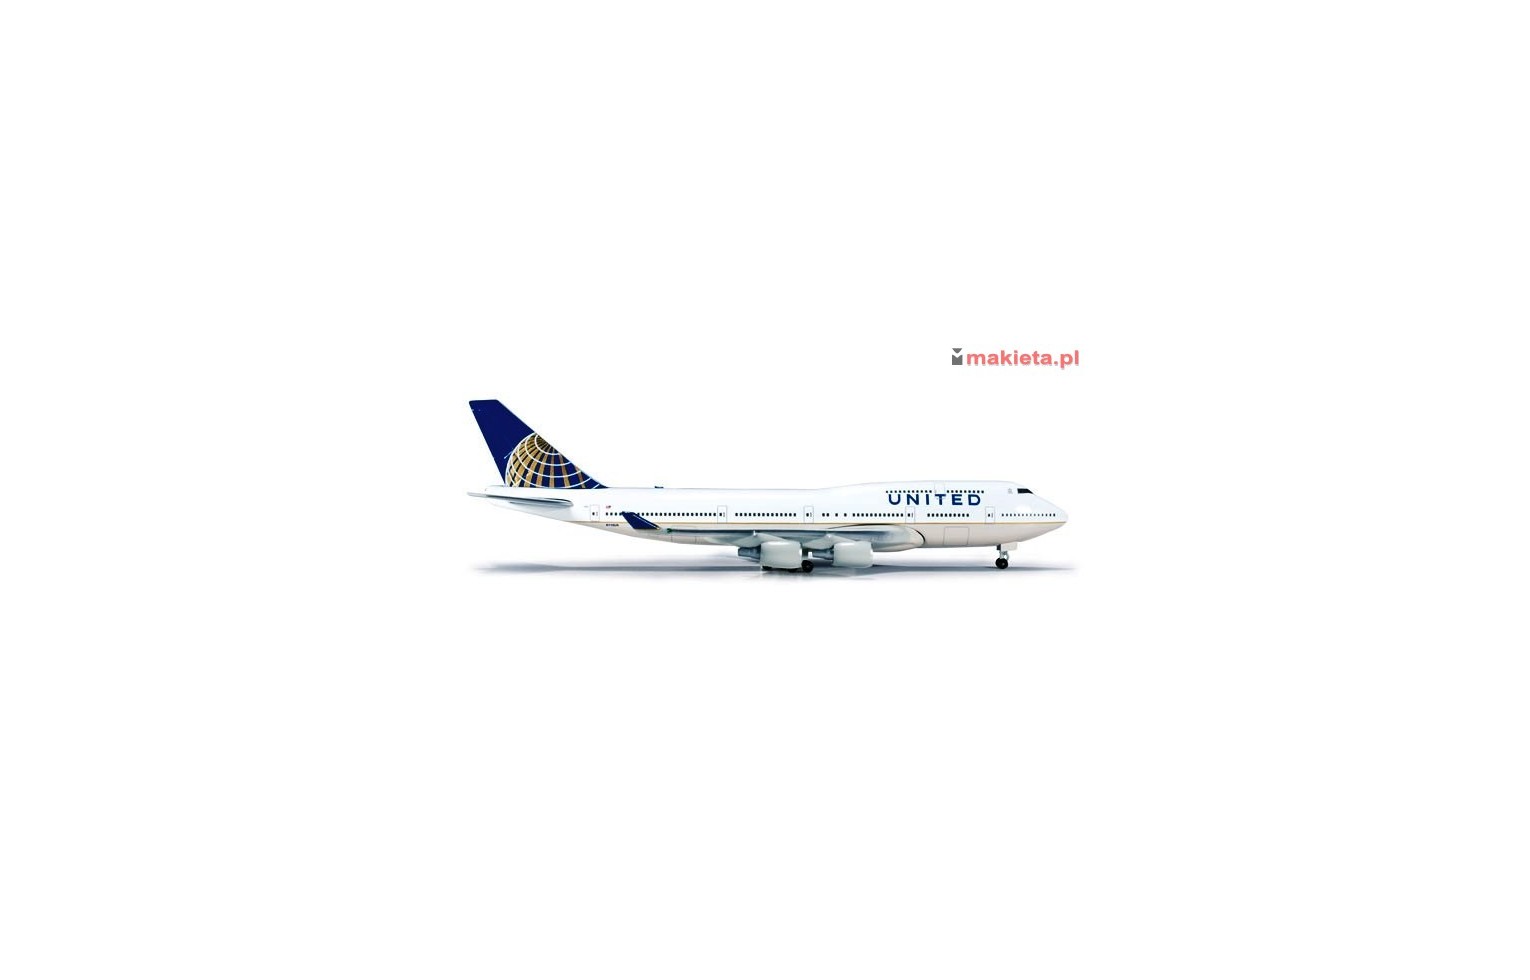 HERPA 518581-002, United Airlines Boeing 747-400, 1:500